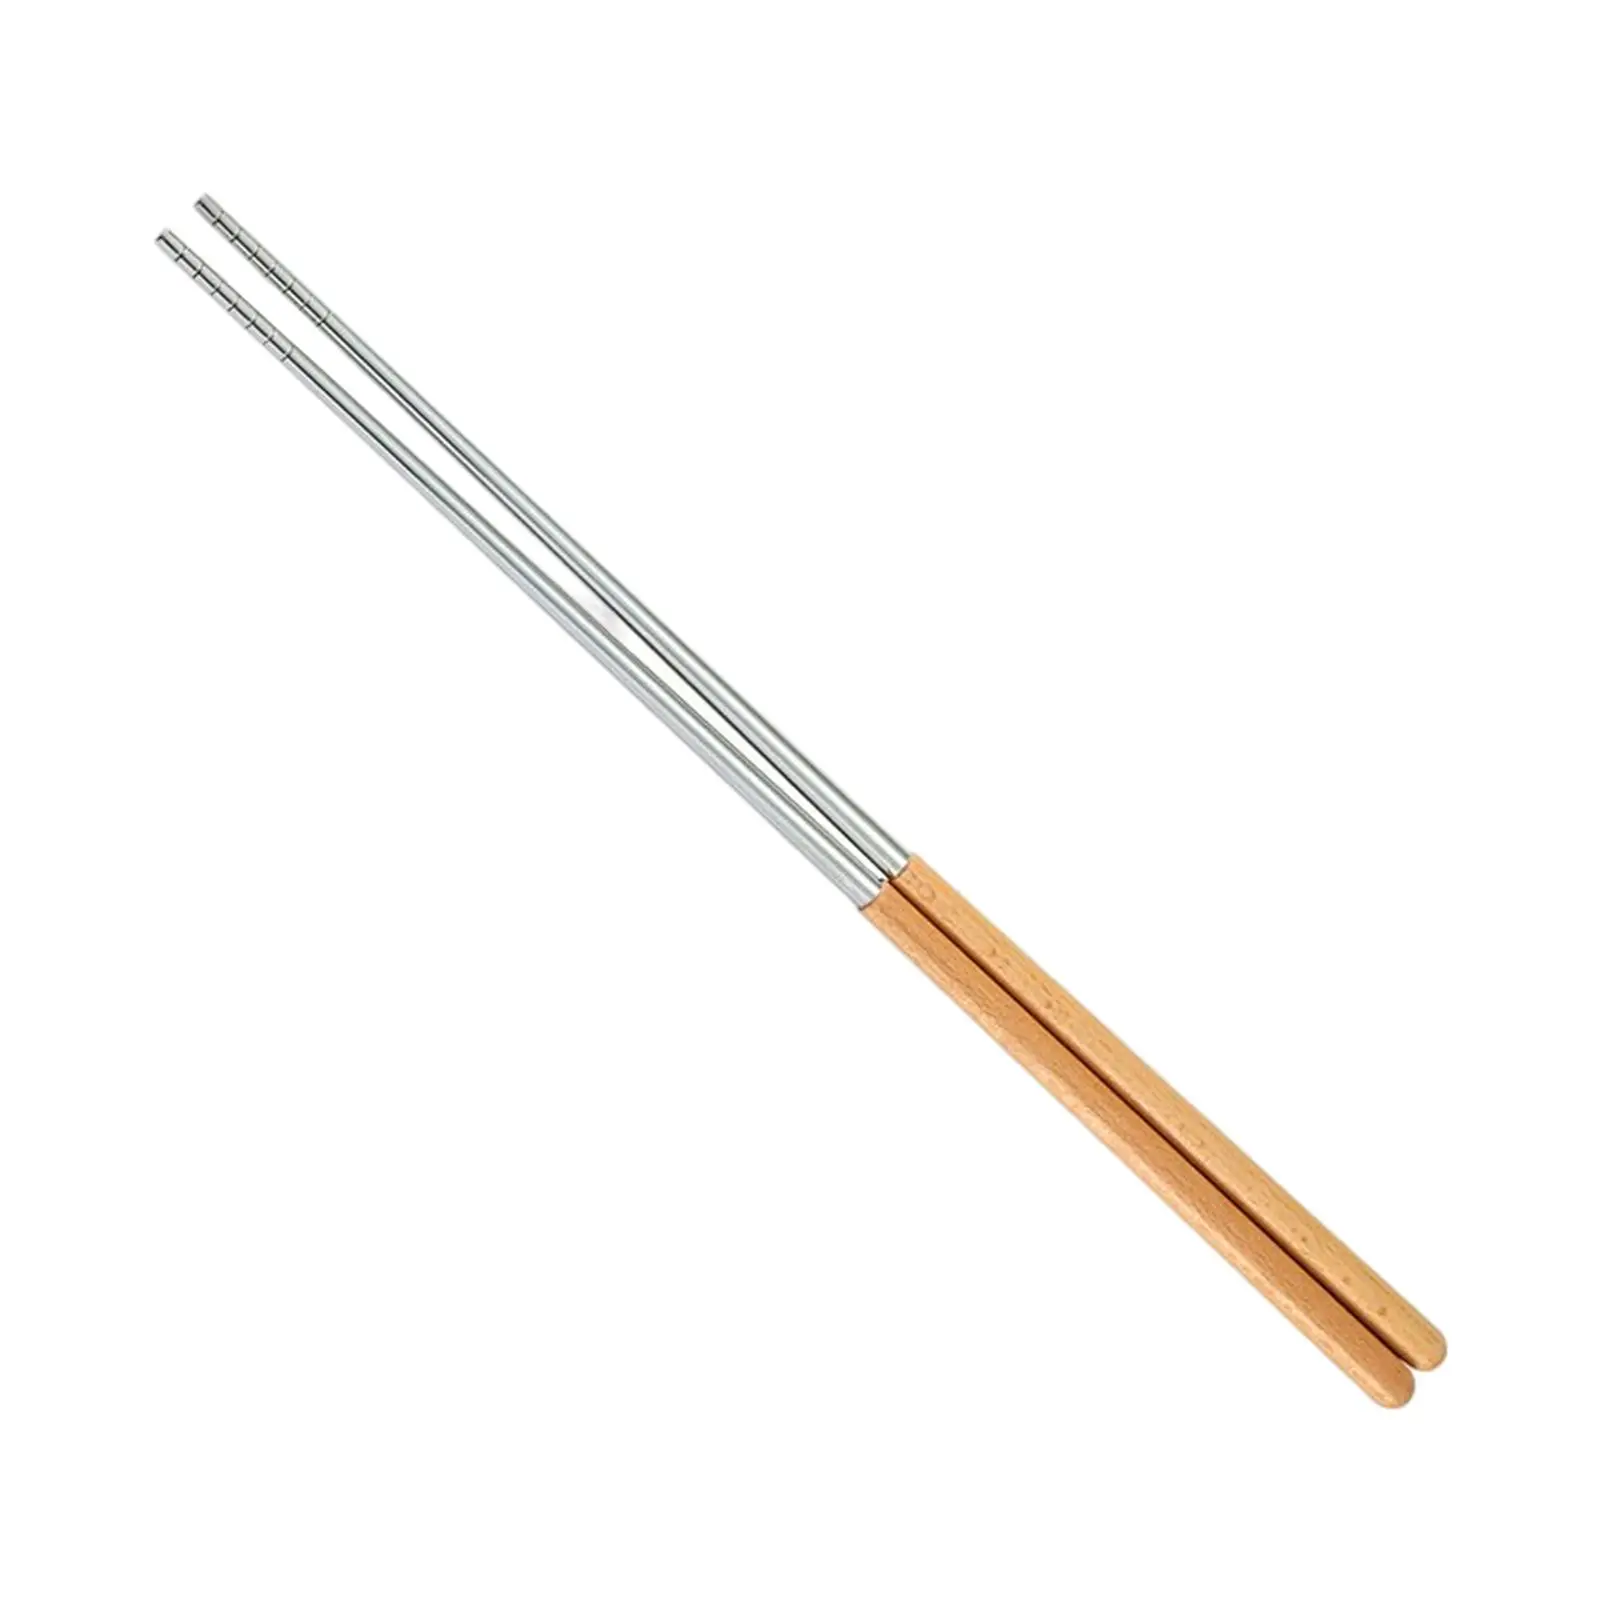 Reusable Lengthen Chopsticks Stainless Steel for Camping Indoor Outdoor BBQ